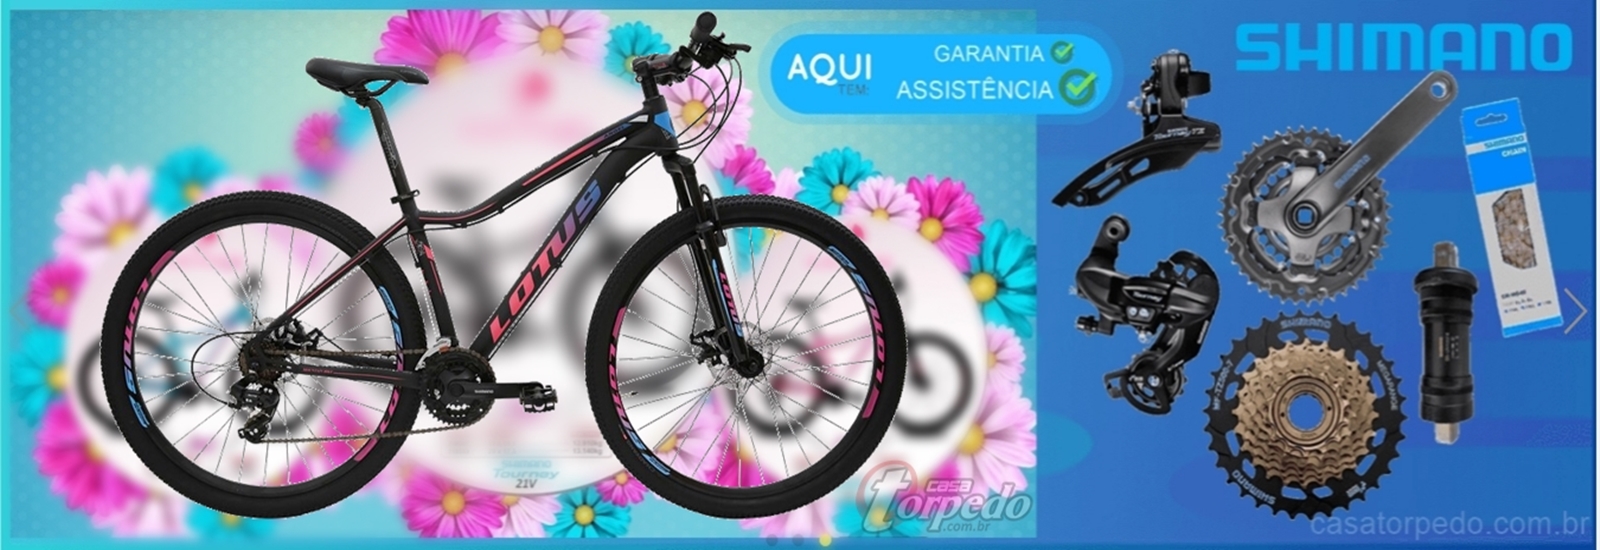 Super Preço! Bicicleta LOTUS ANGEL aro 29 - quadro garantia vitalicia